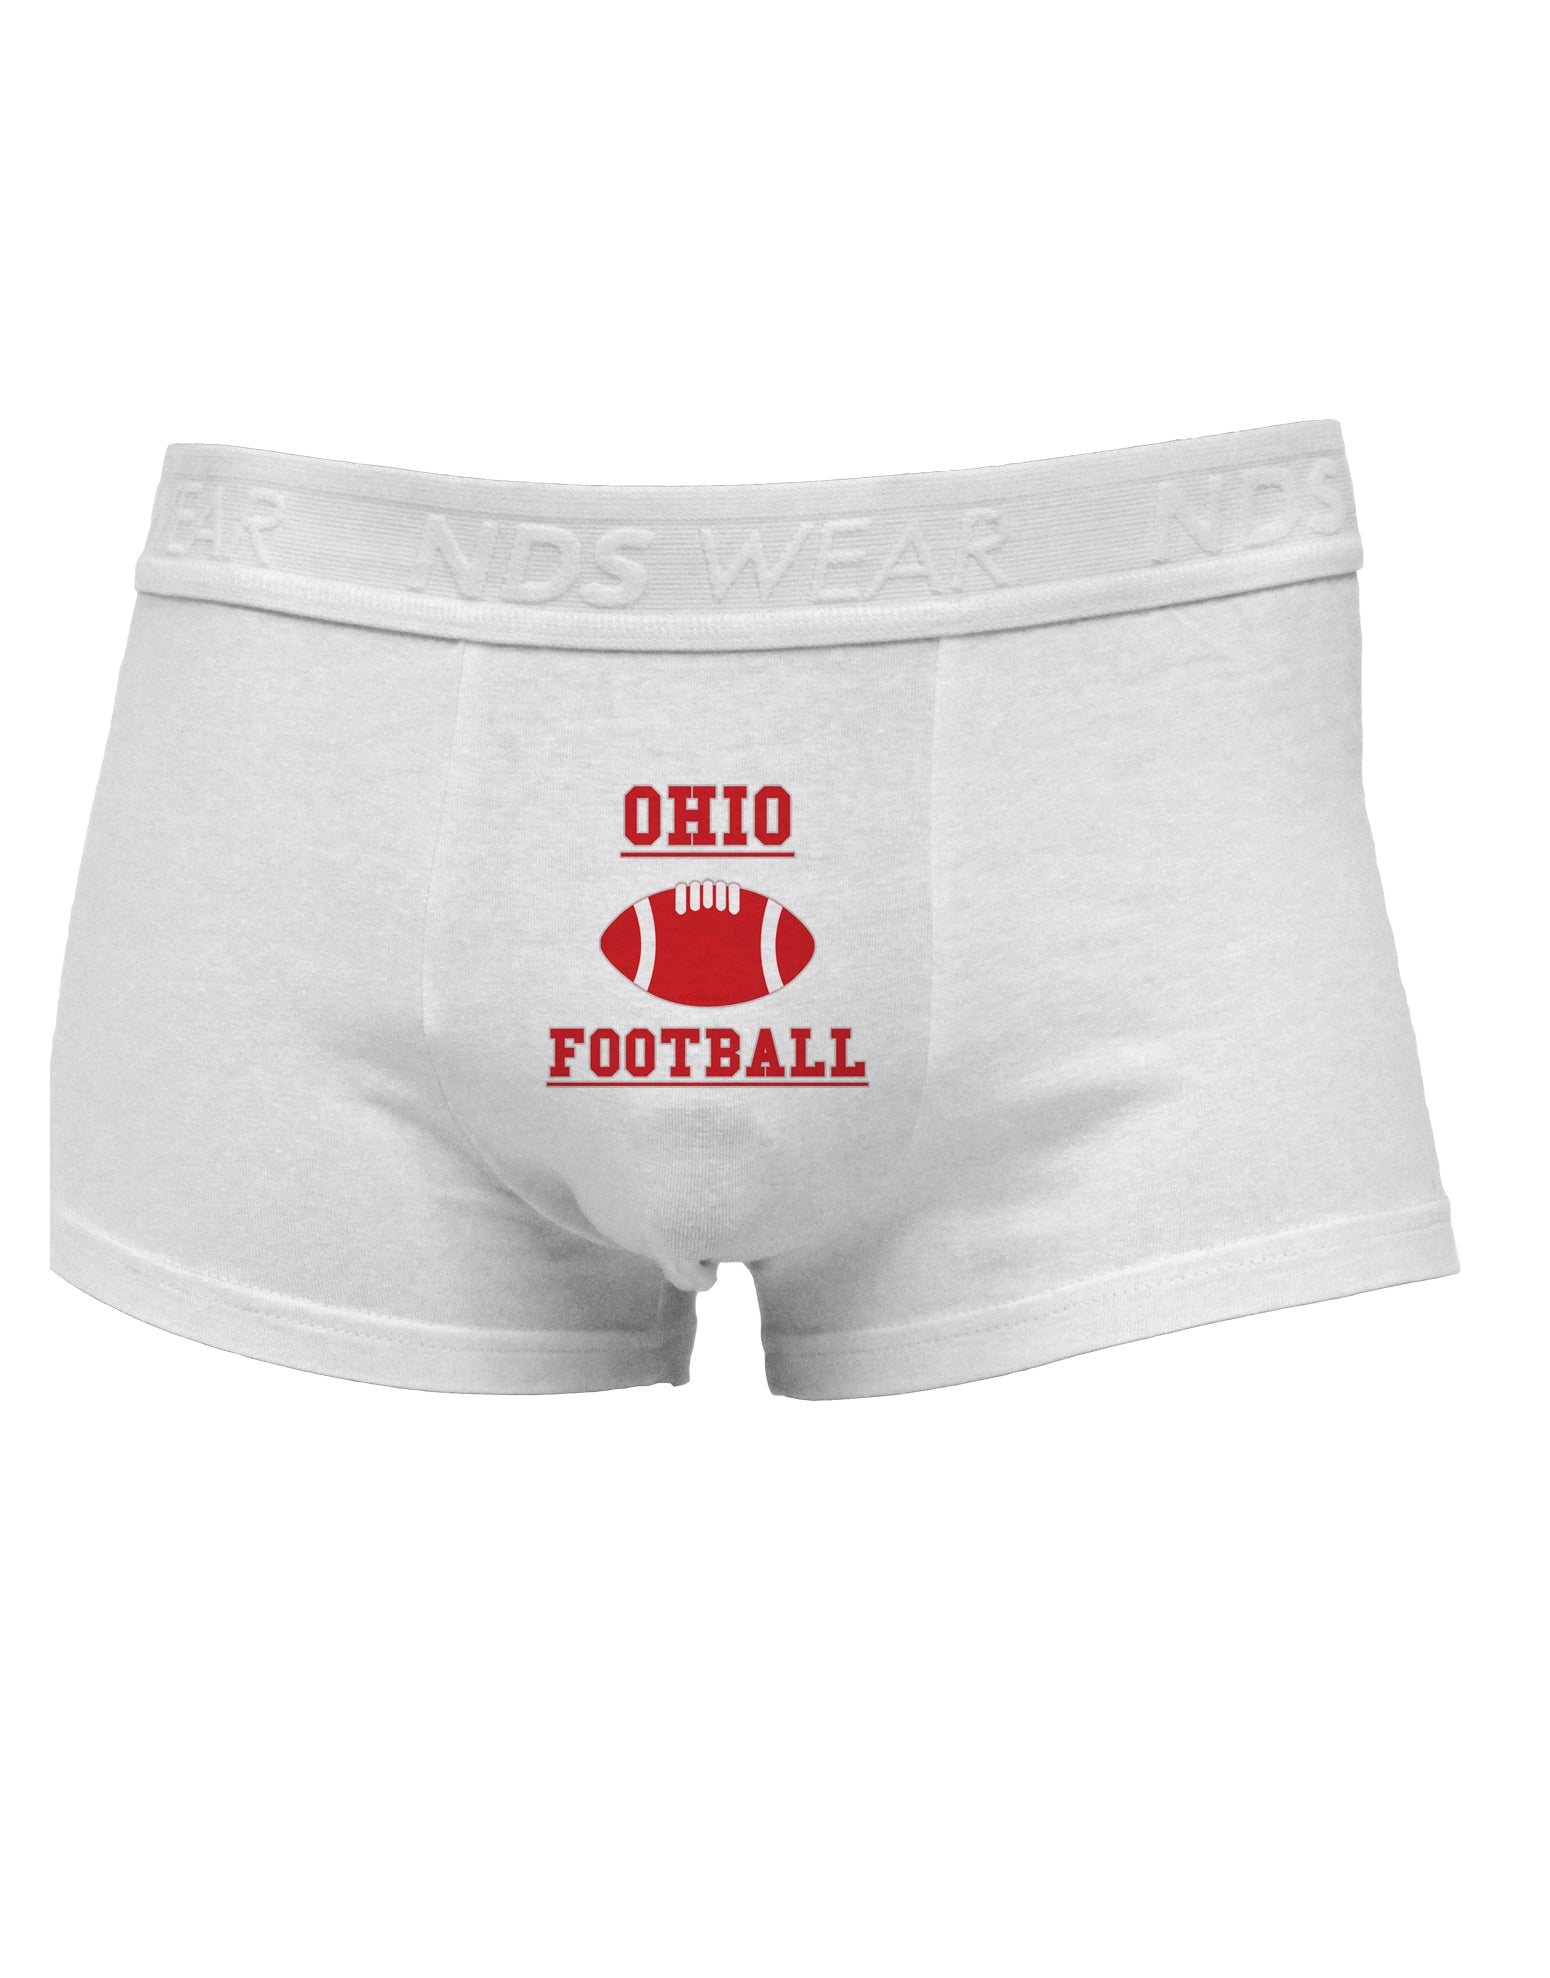 Ohio Football Mens Cotton Trunk Underwear by TooLoud - Davson Sales